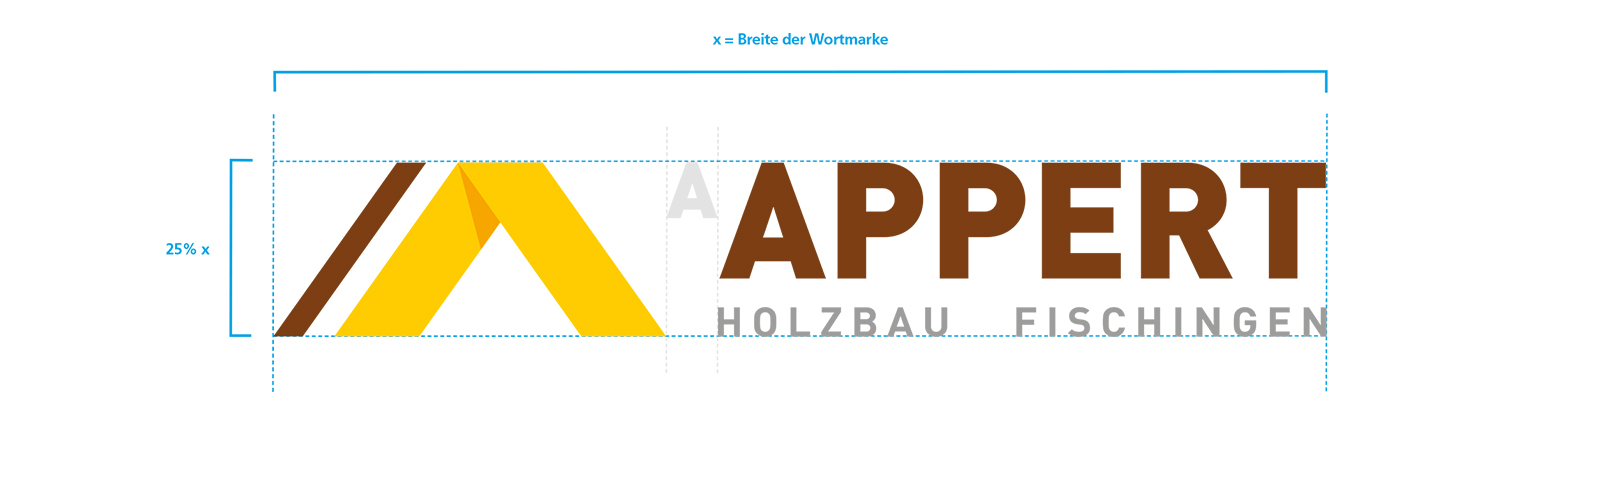 Appert Holzbau Logo 001